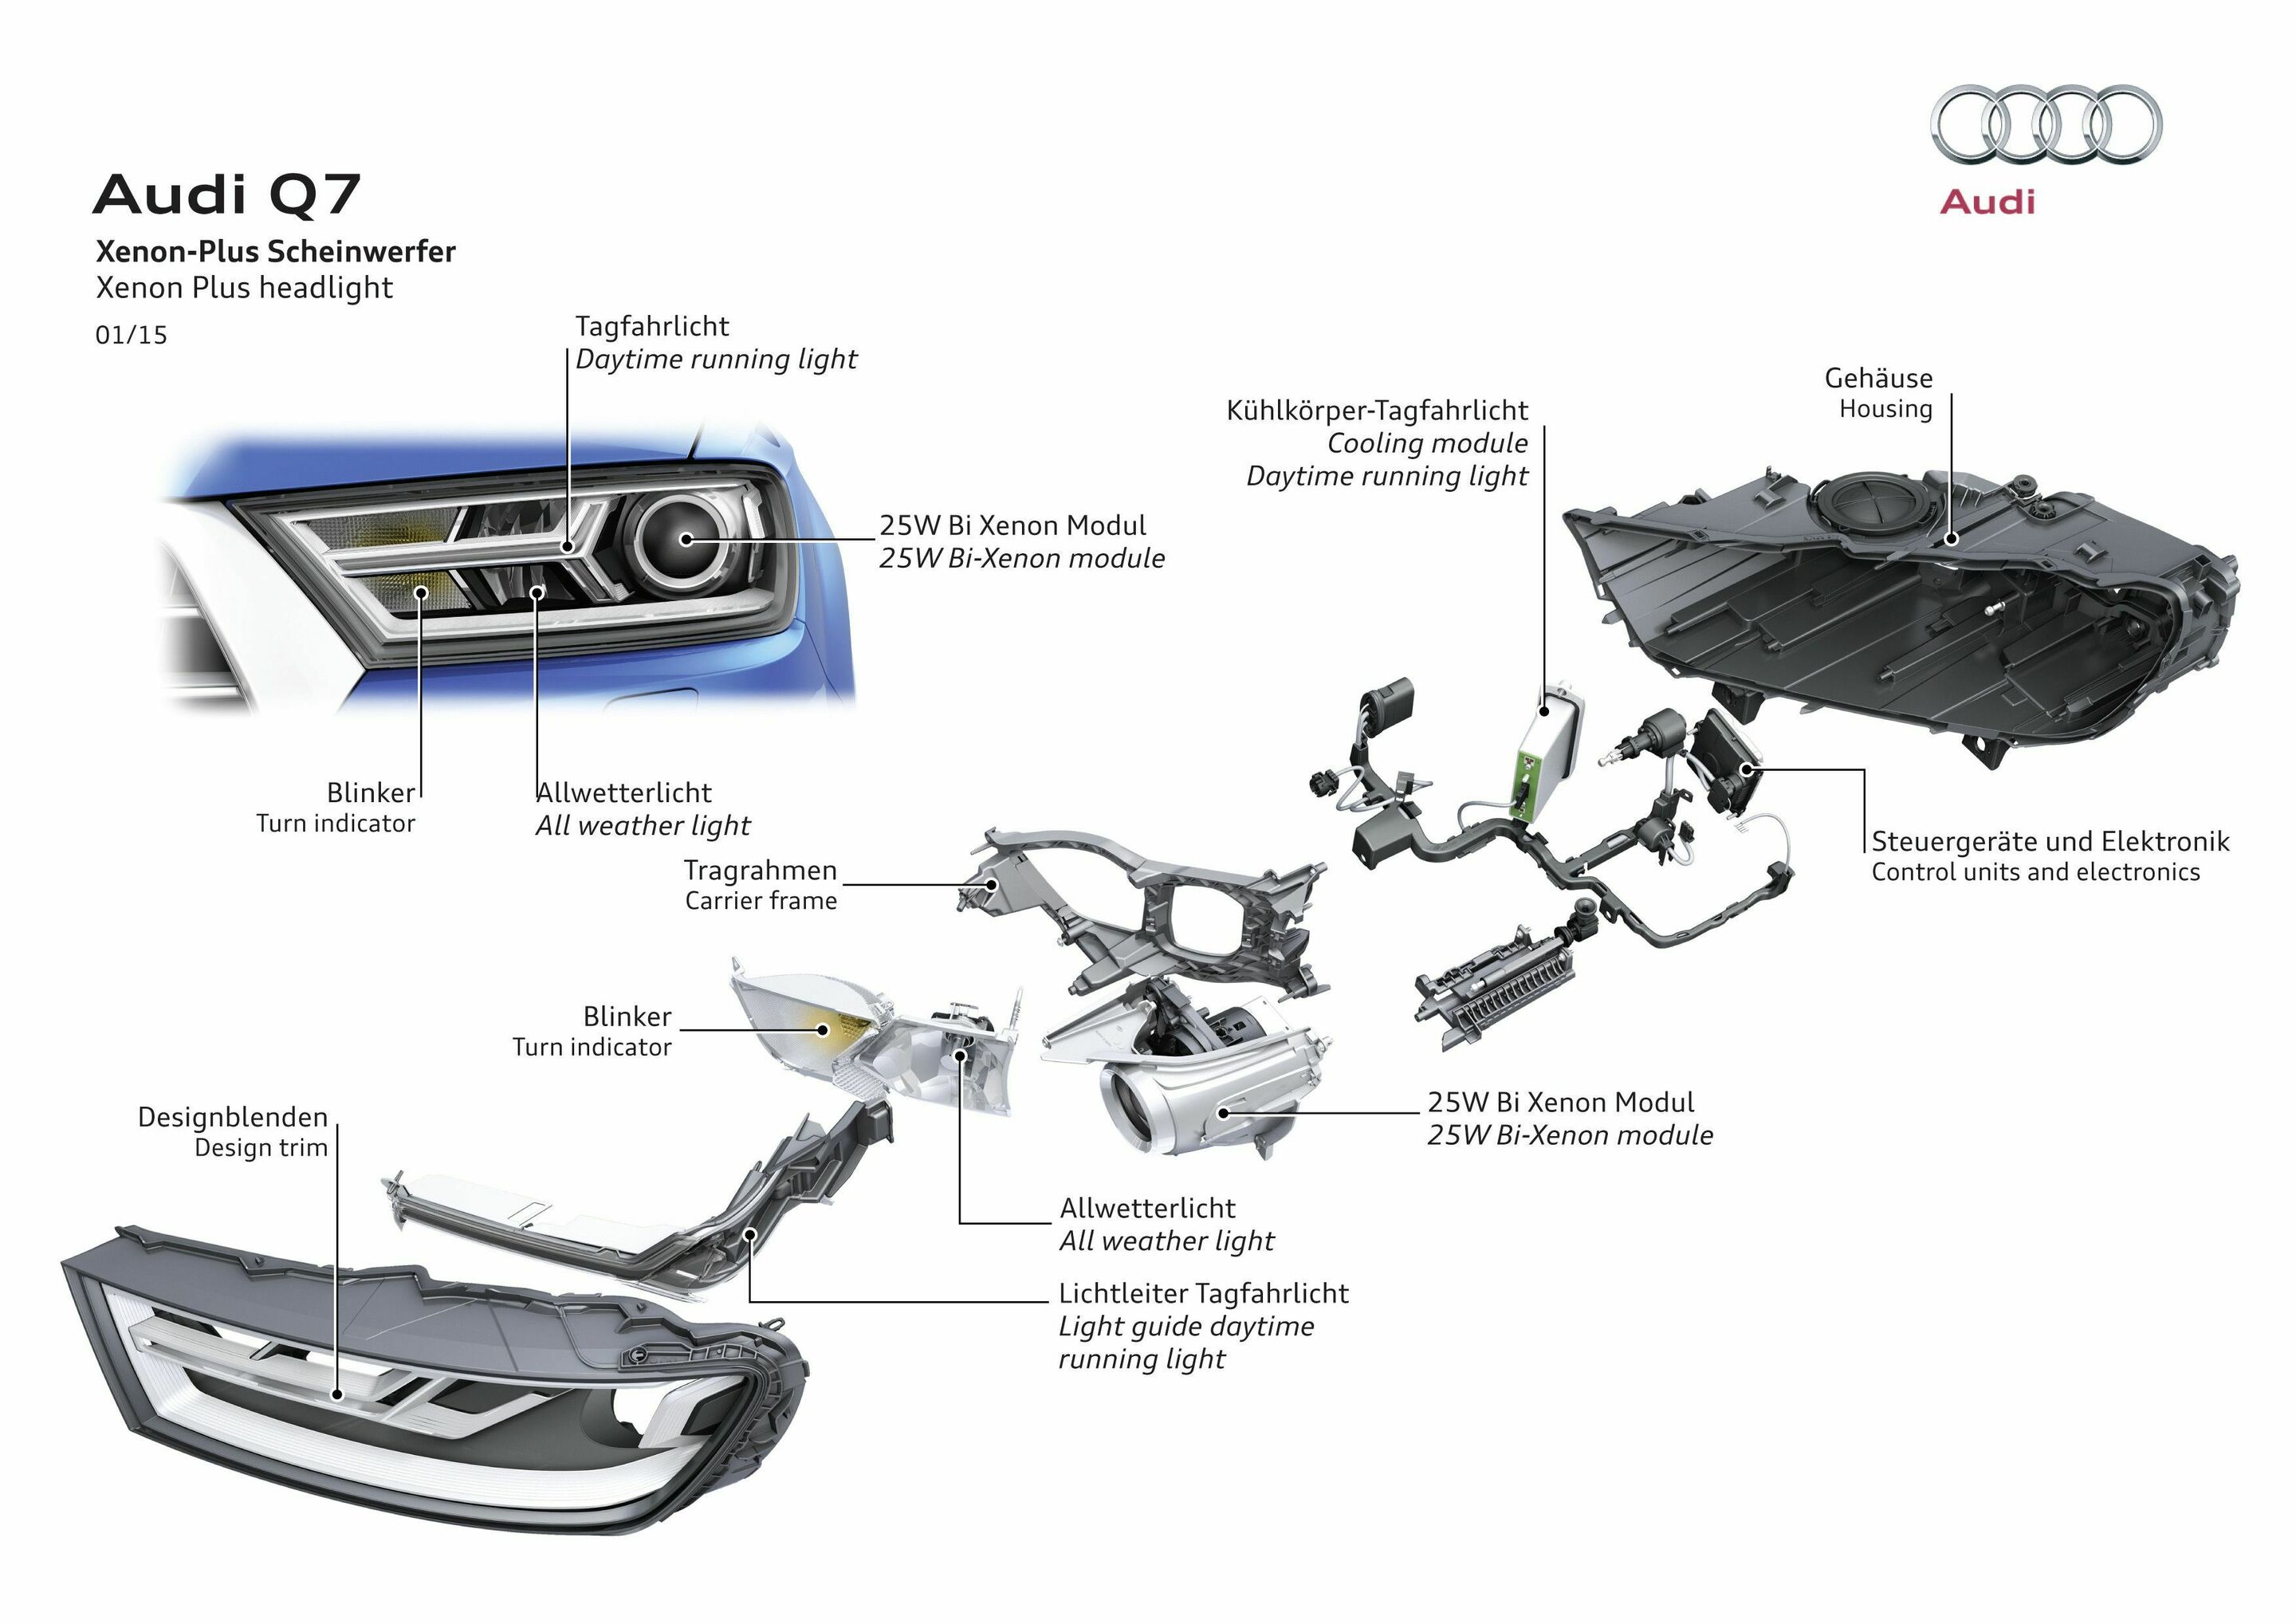 Xenon Plus headlight Audi Q7